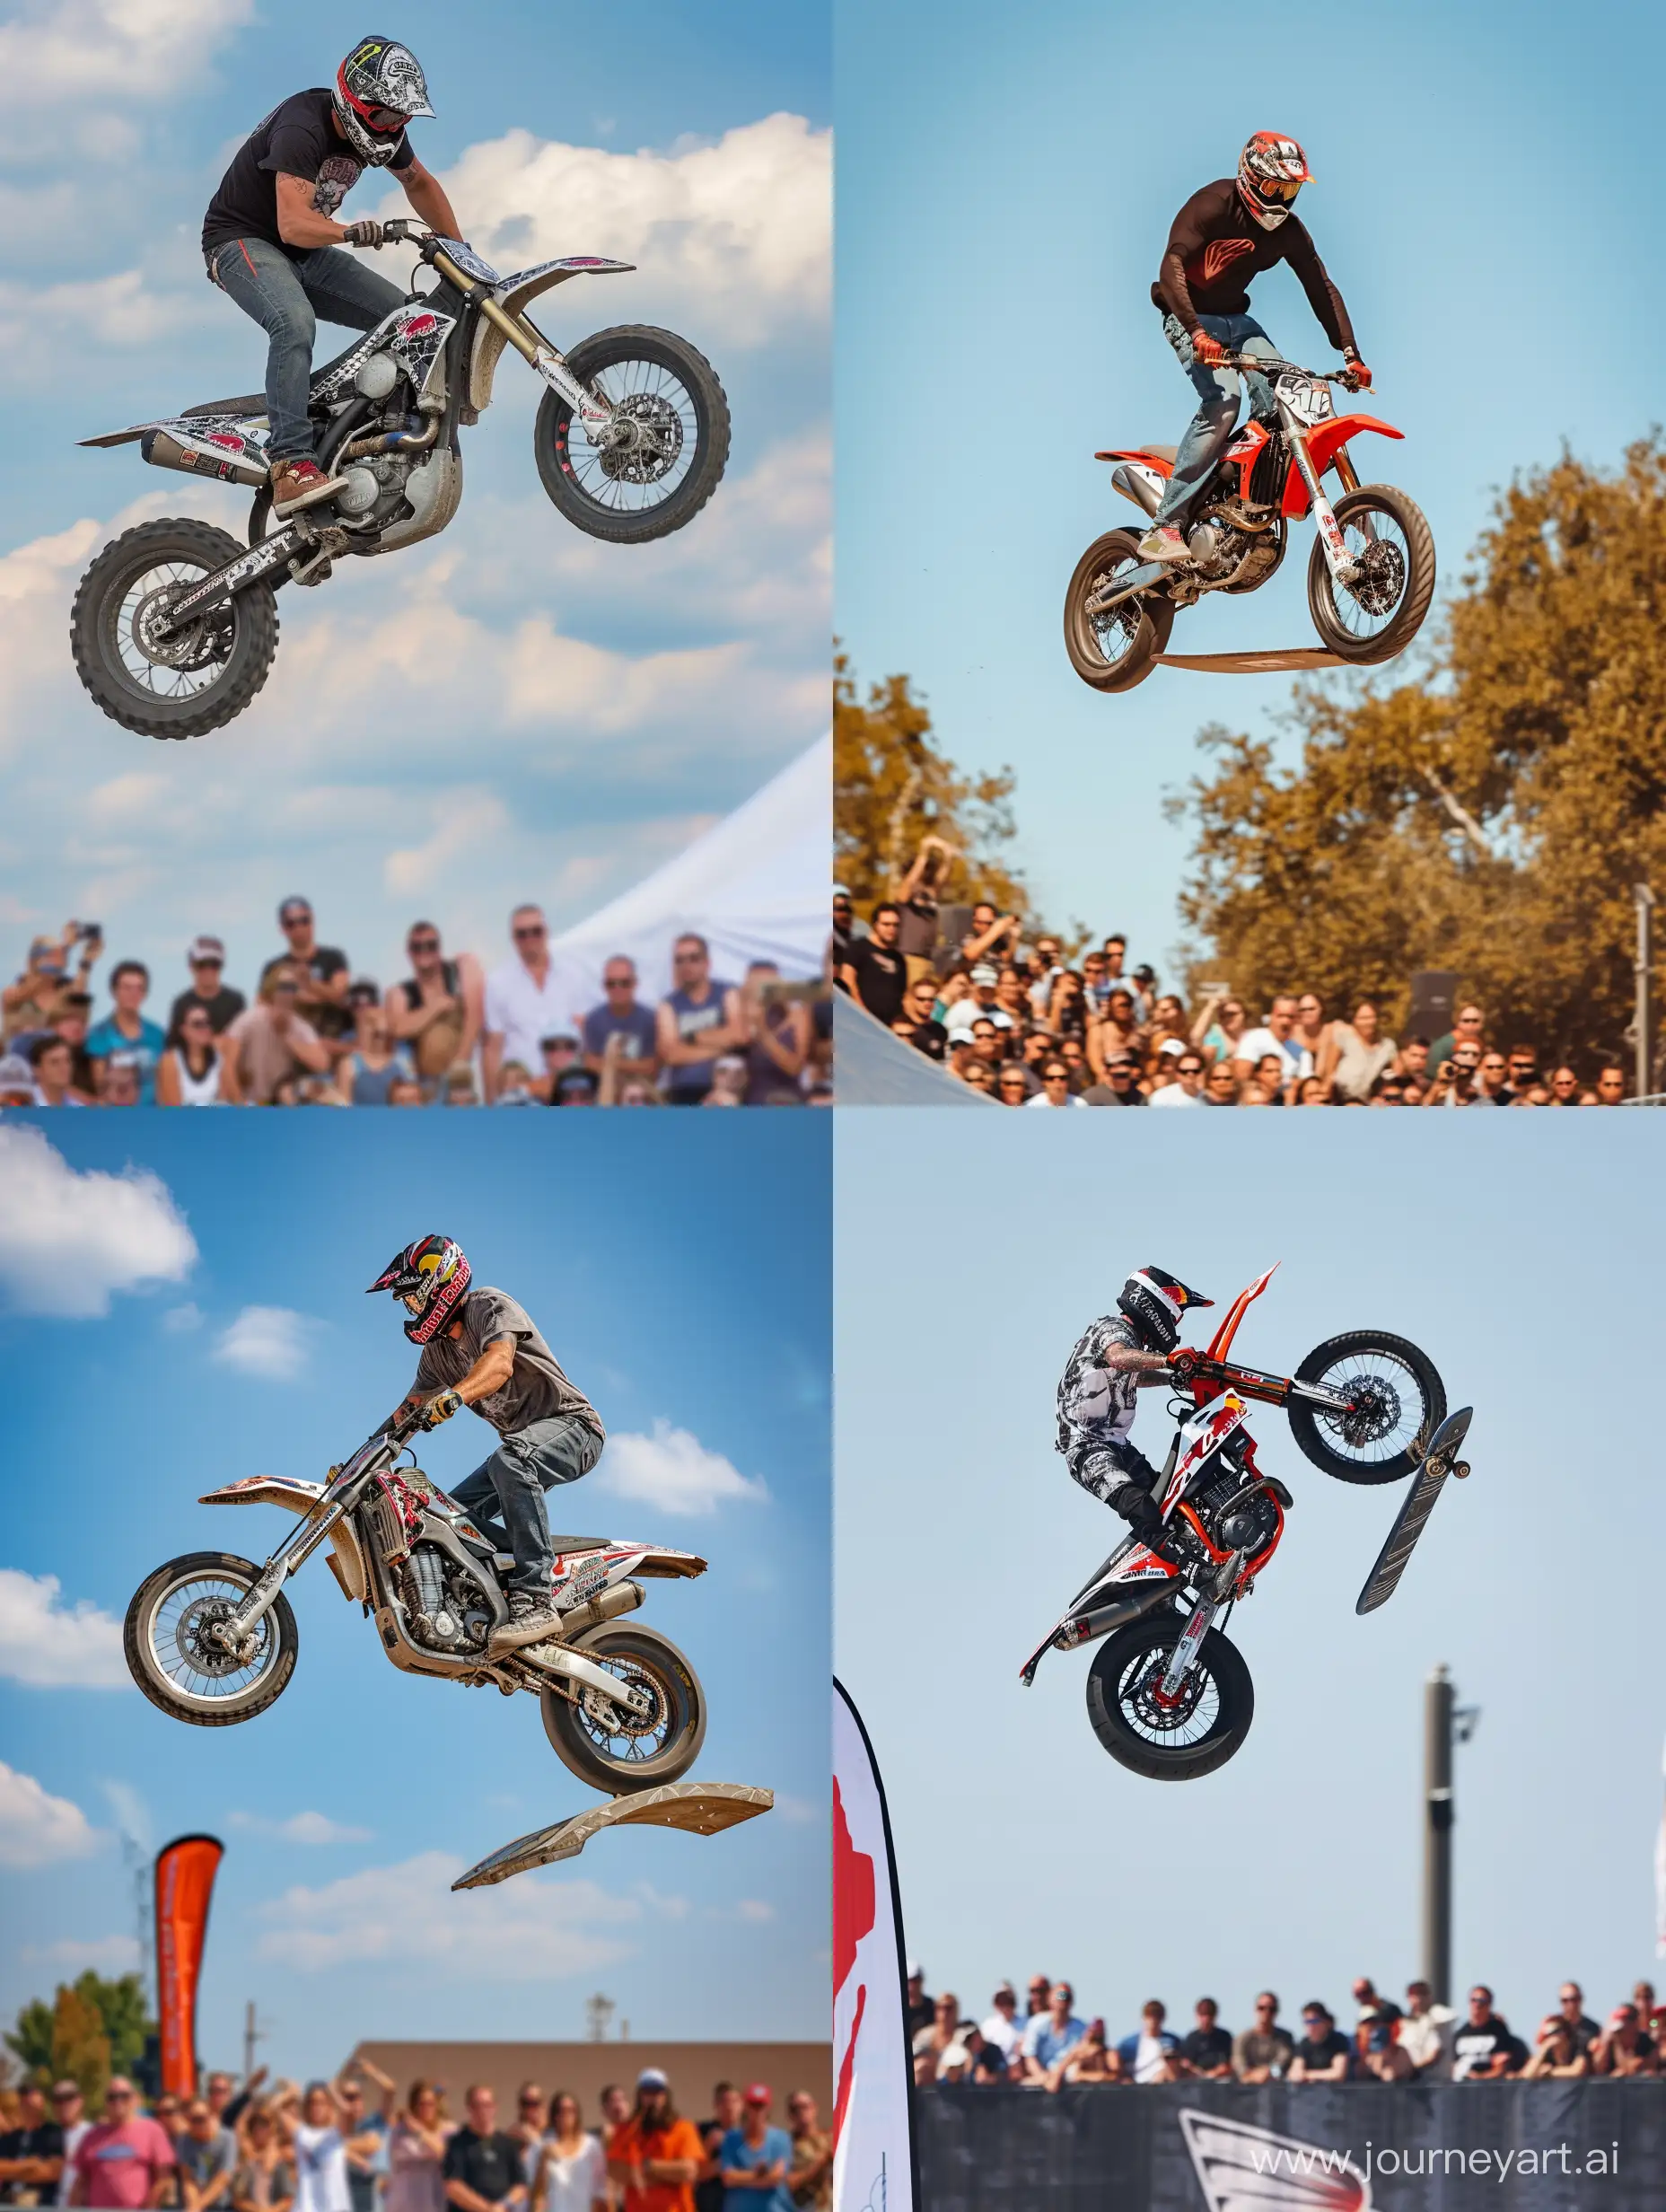 Daring-Motorcycle-Backflip-Spectacular-Stunt-Performance